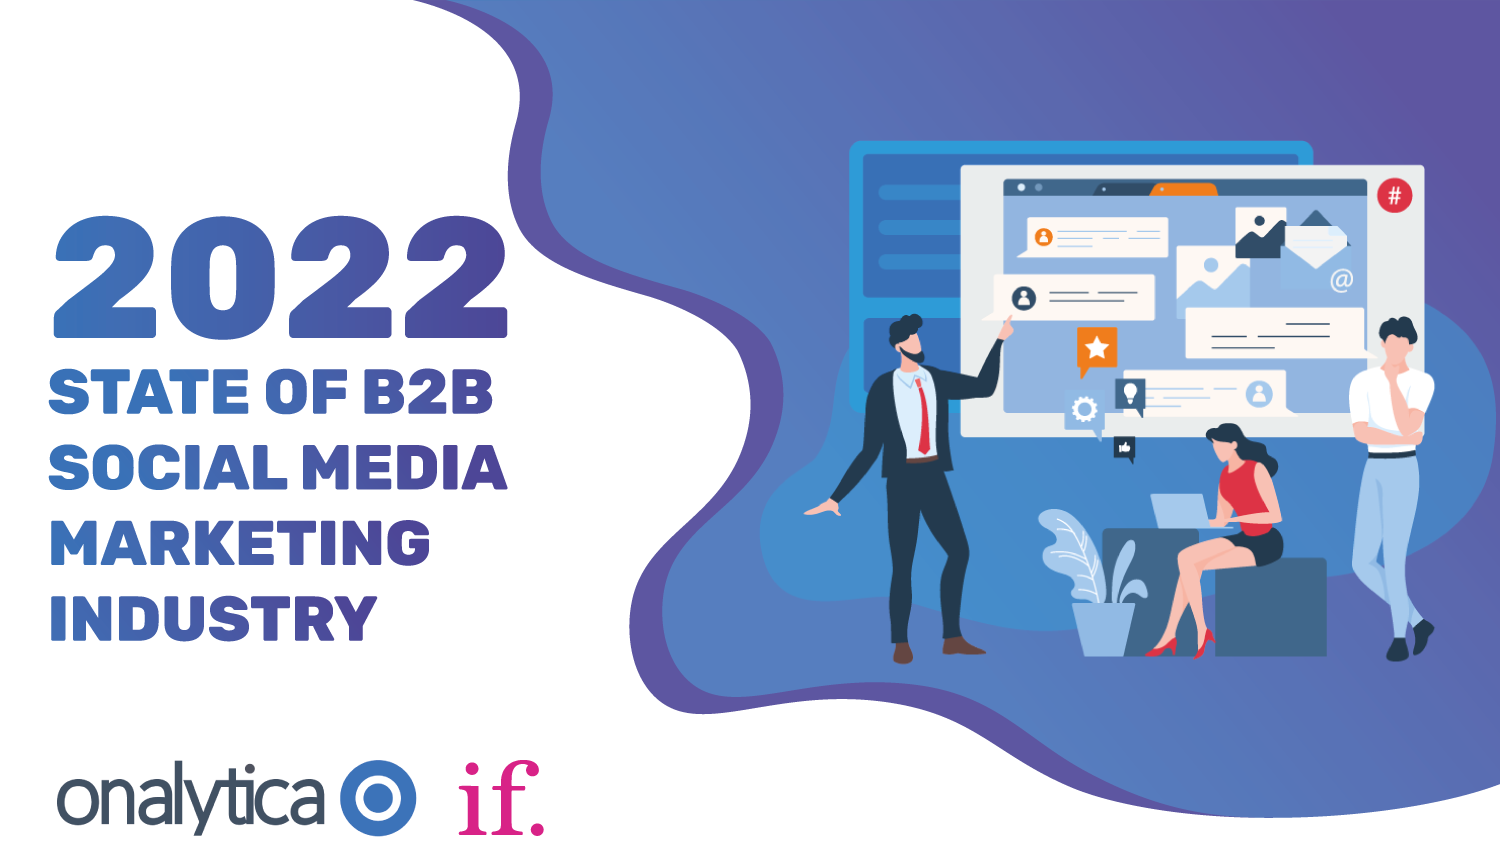 2022 State of B2B Social Media Marketing Industry